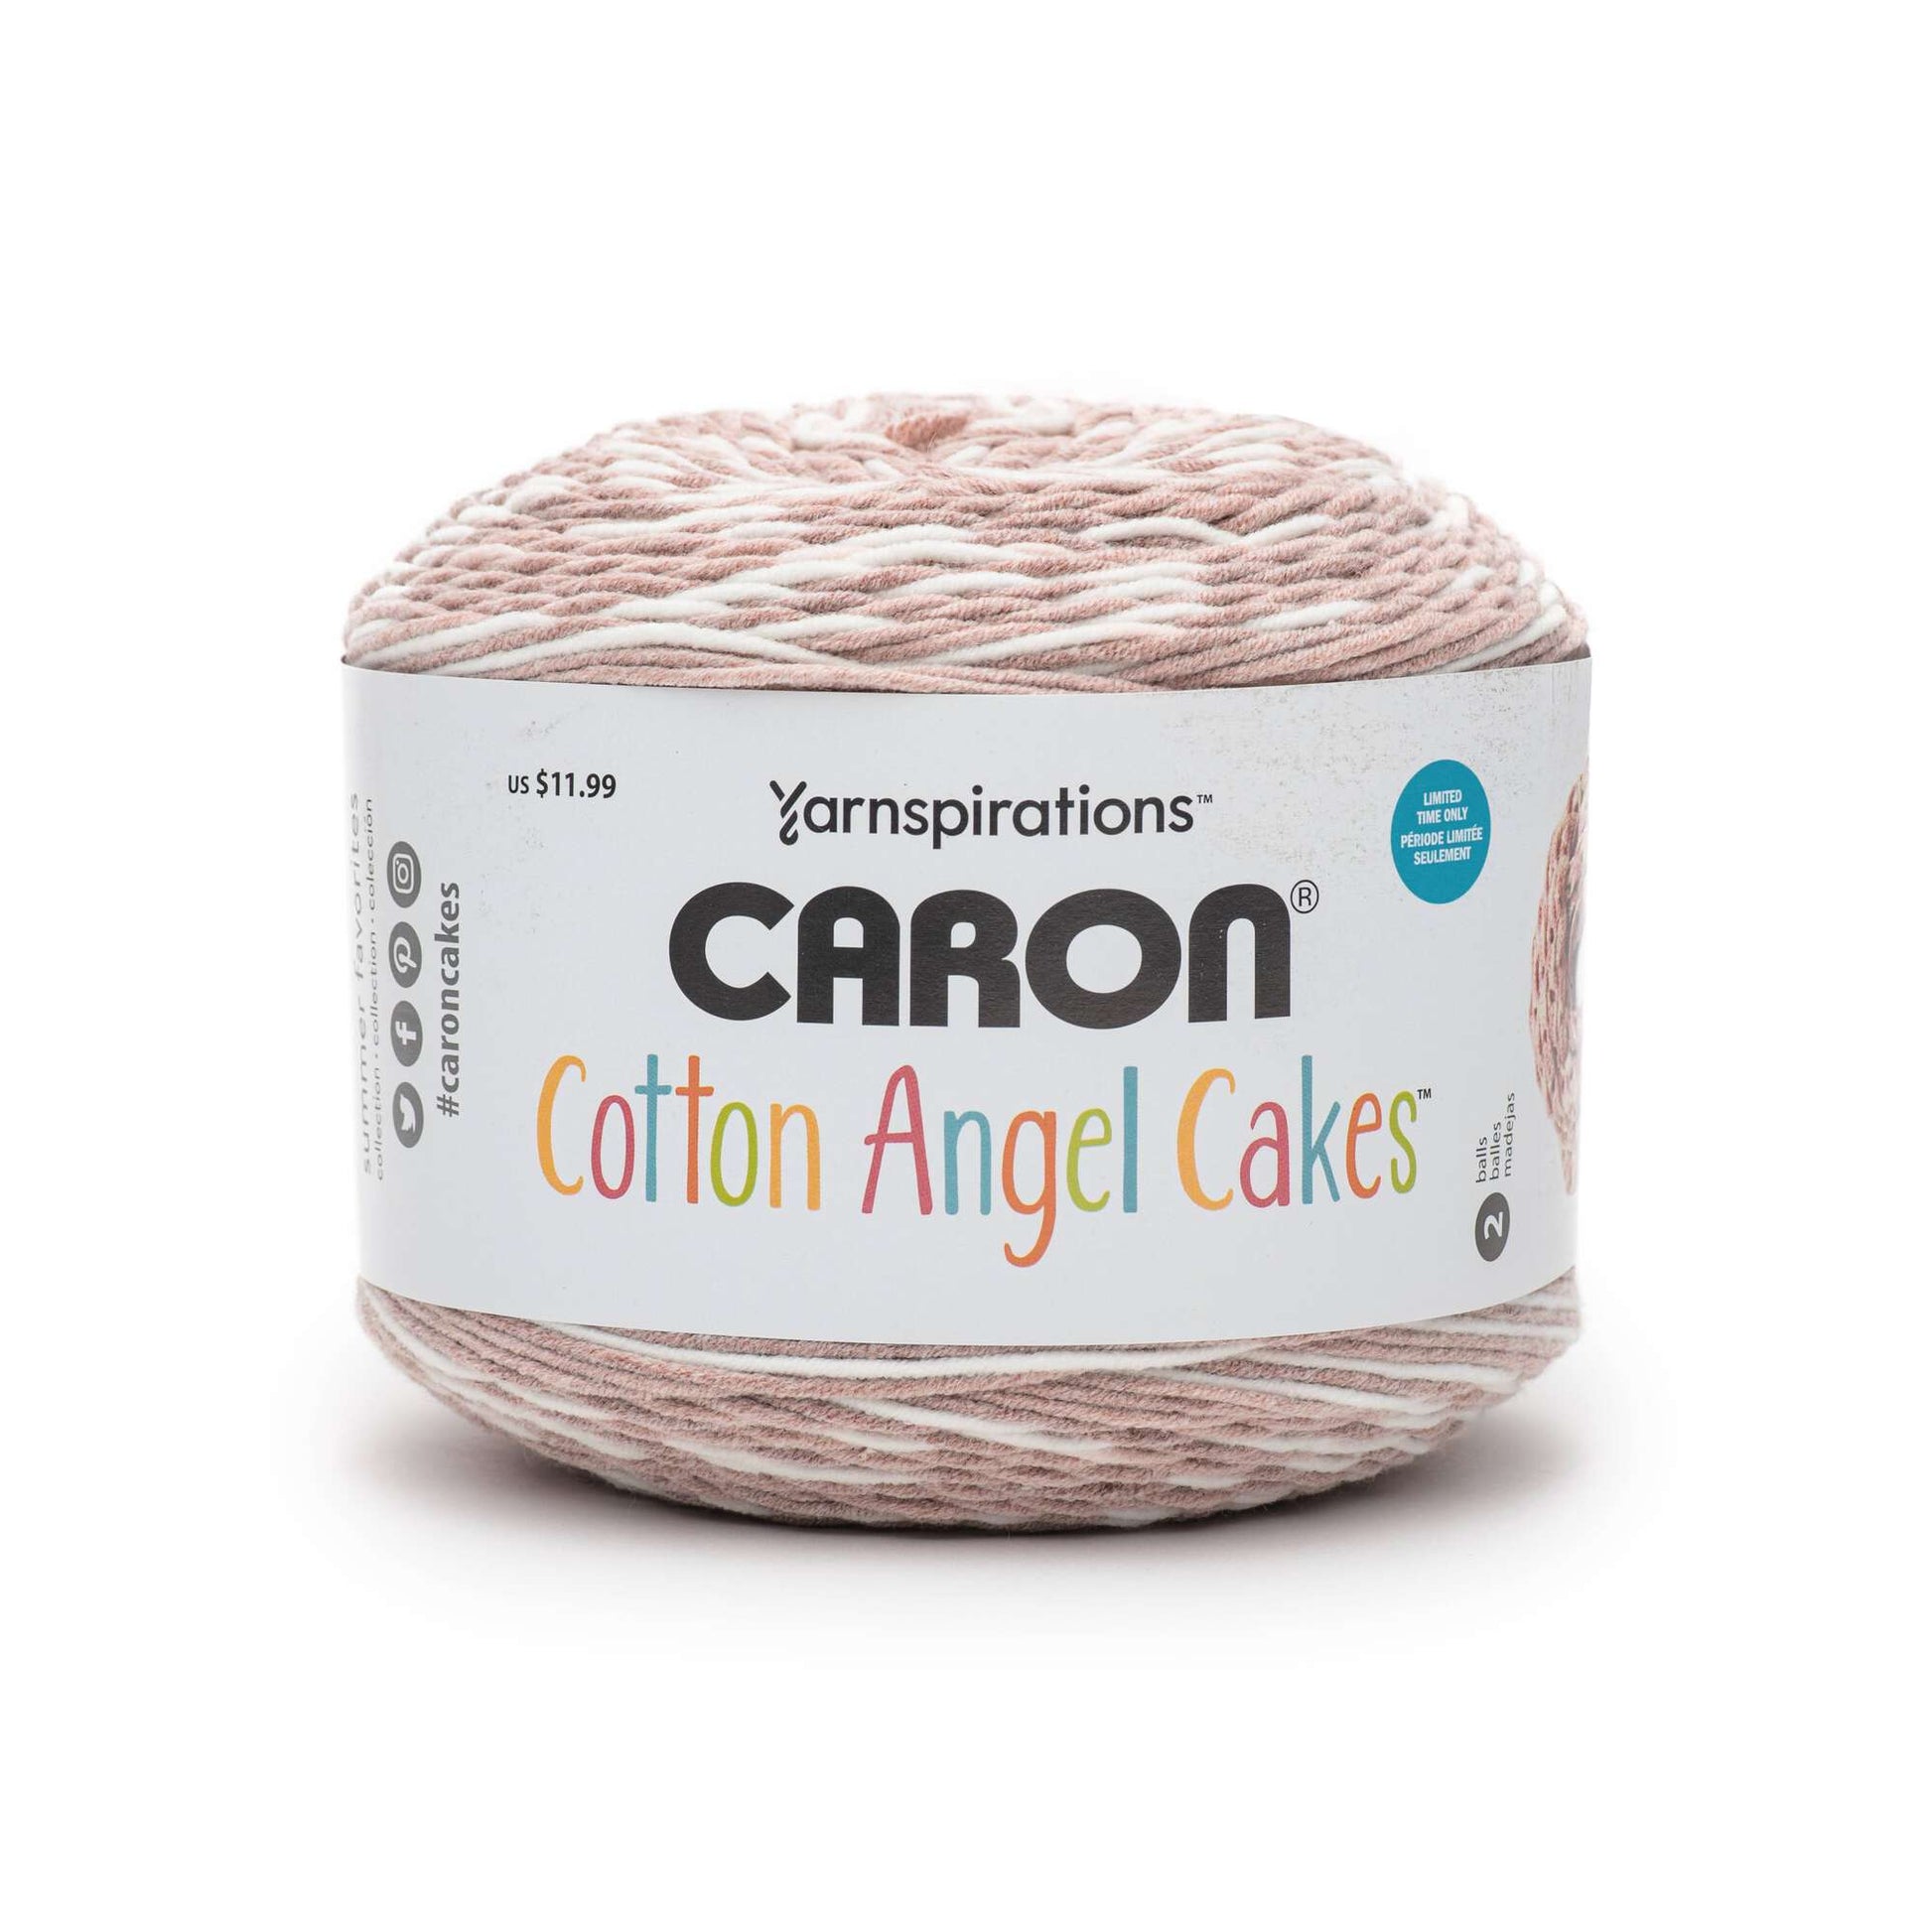 Caron Cotton Angel Cakes Yarn (500g/17.7oz) - Clearance Shades*